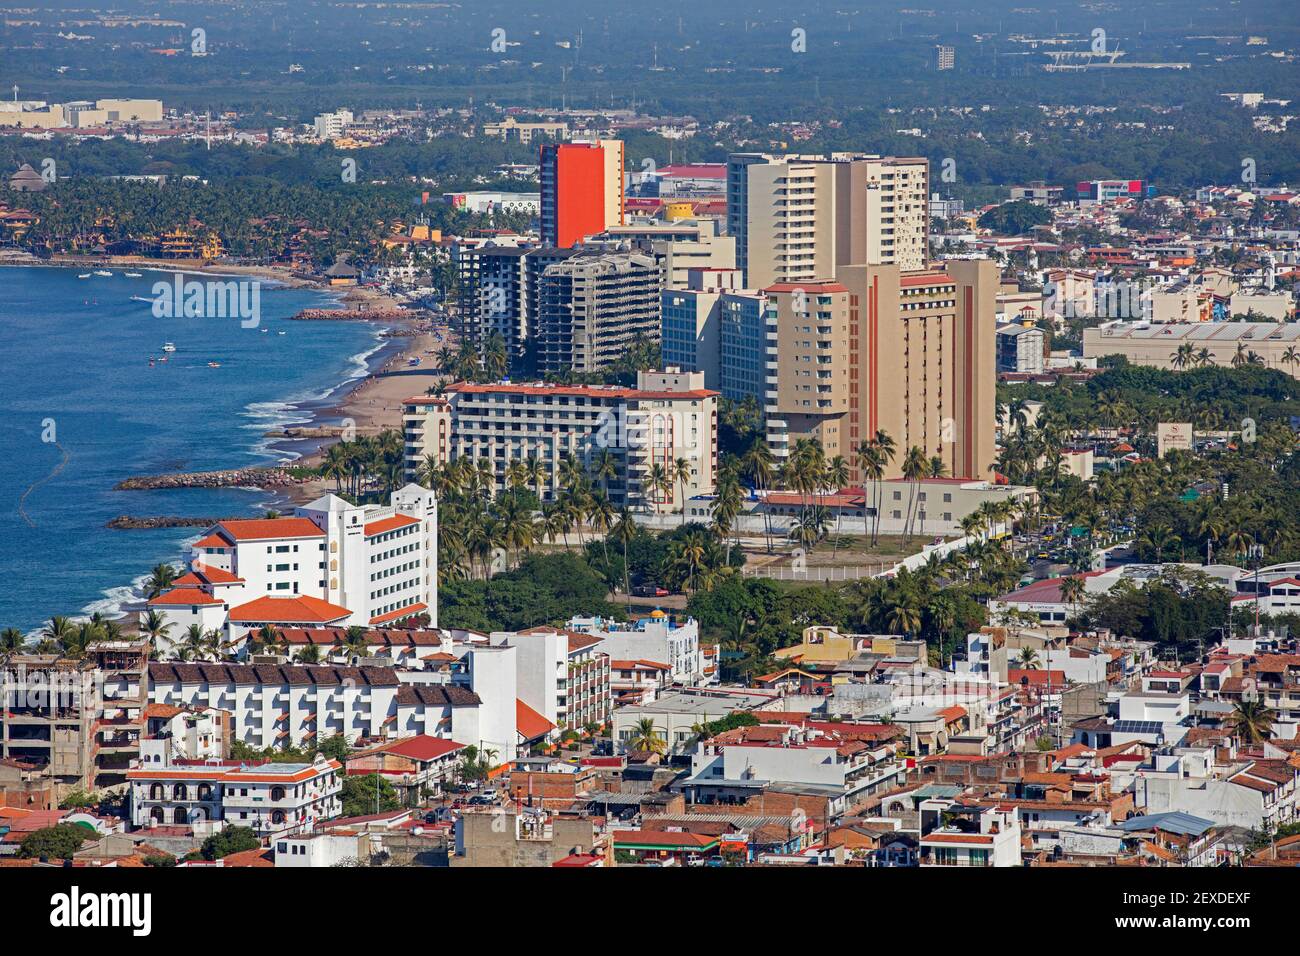 Aerial view over Puerto Vallarta, Mexican beach resort city situated on the Pacific Ocean's Bahía de Banderas, Jalisco, Mexico Stock Photo